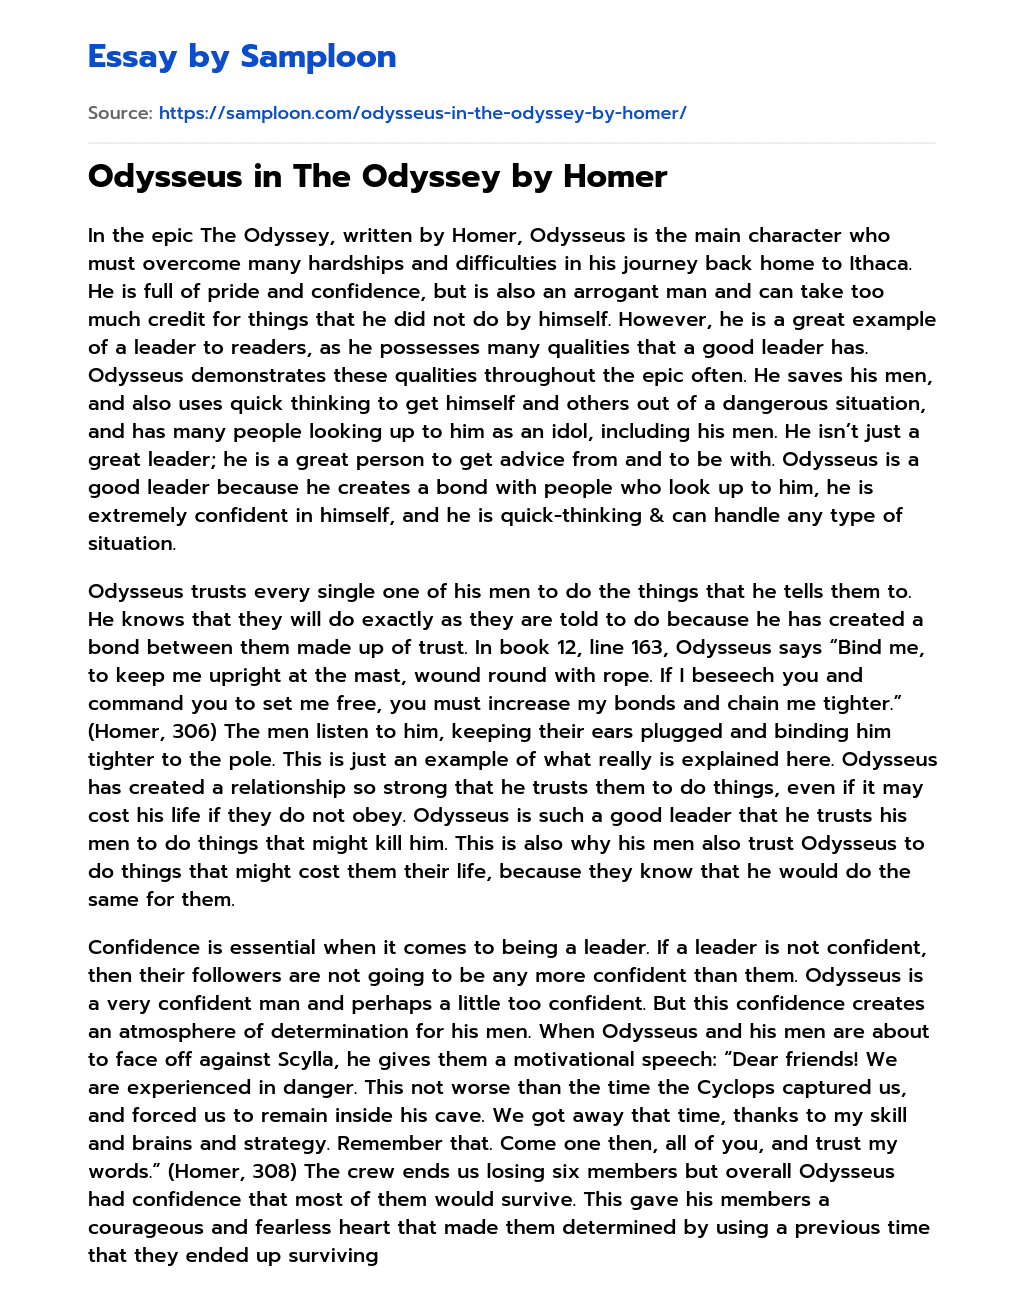 Odysseus in The Odyssey by Homer essay